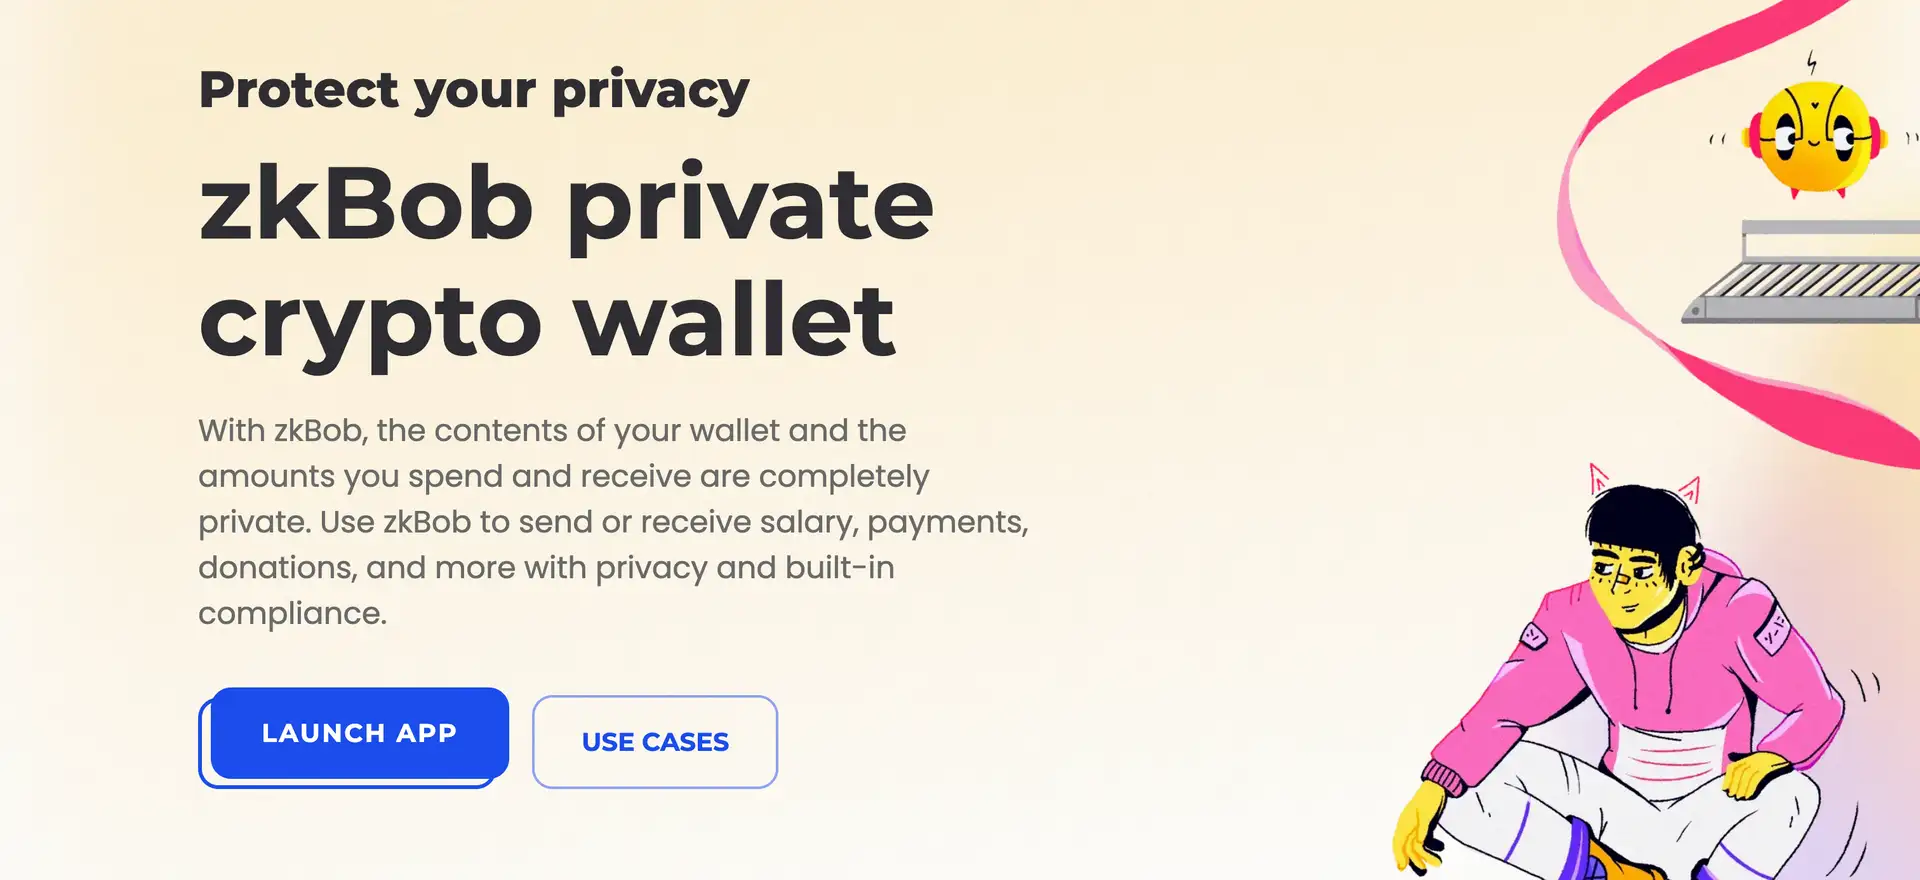 zkBob private wallet